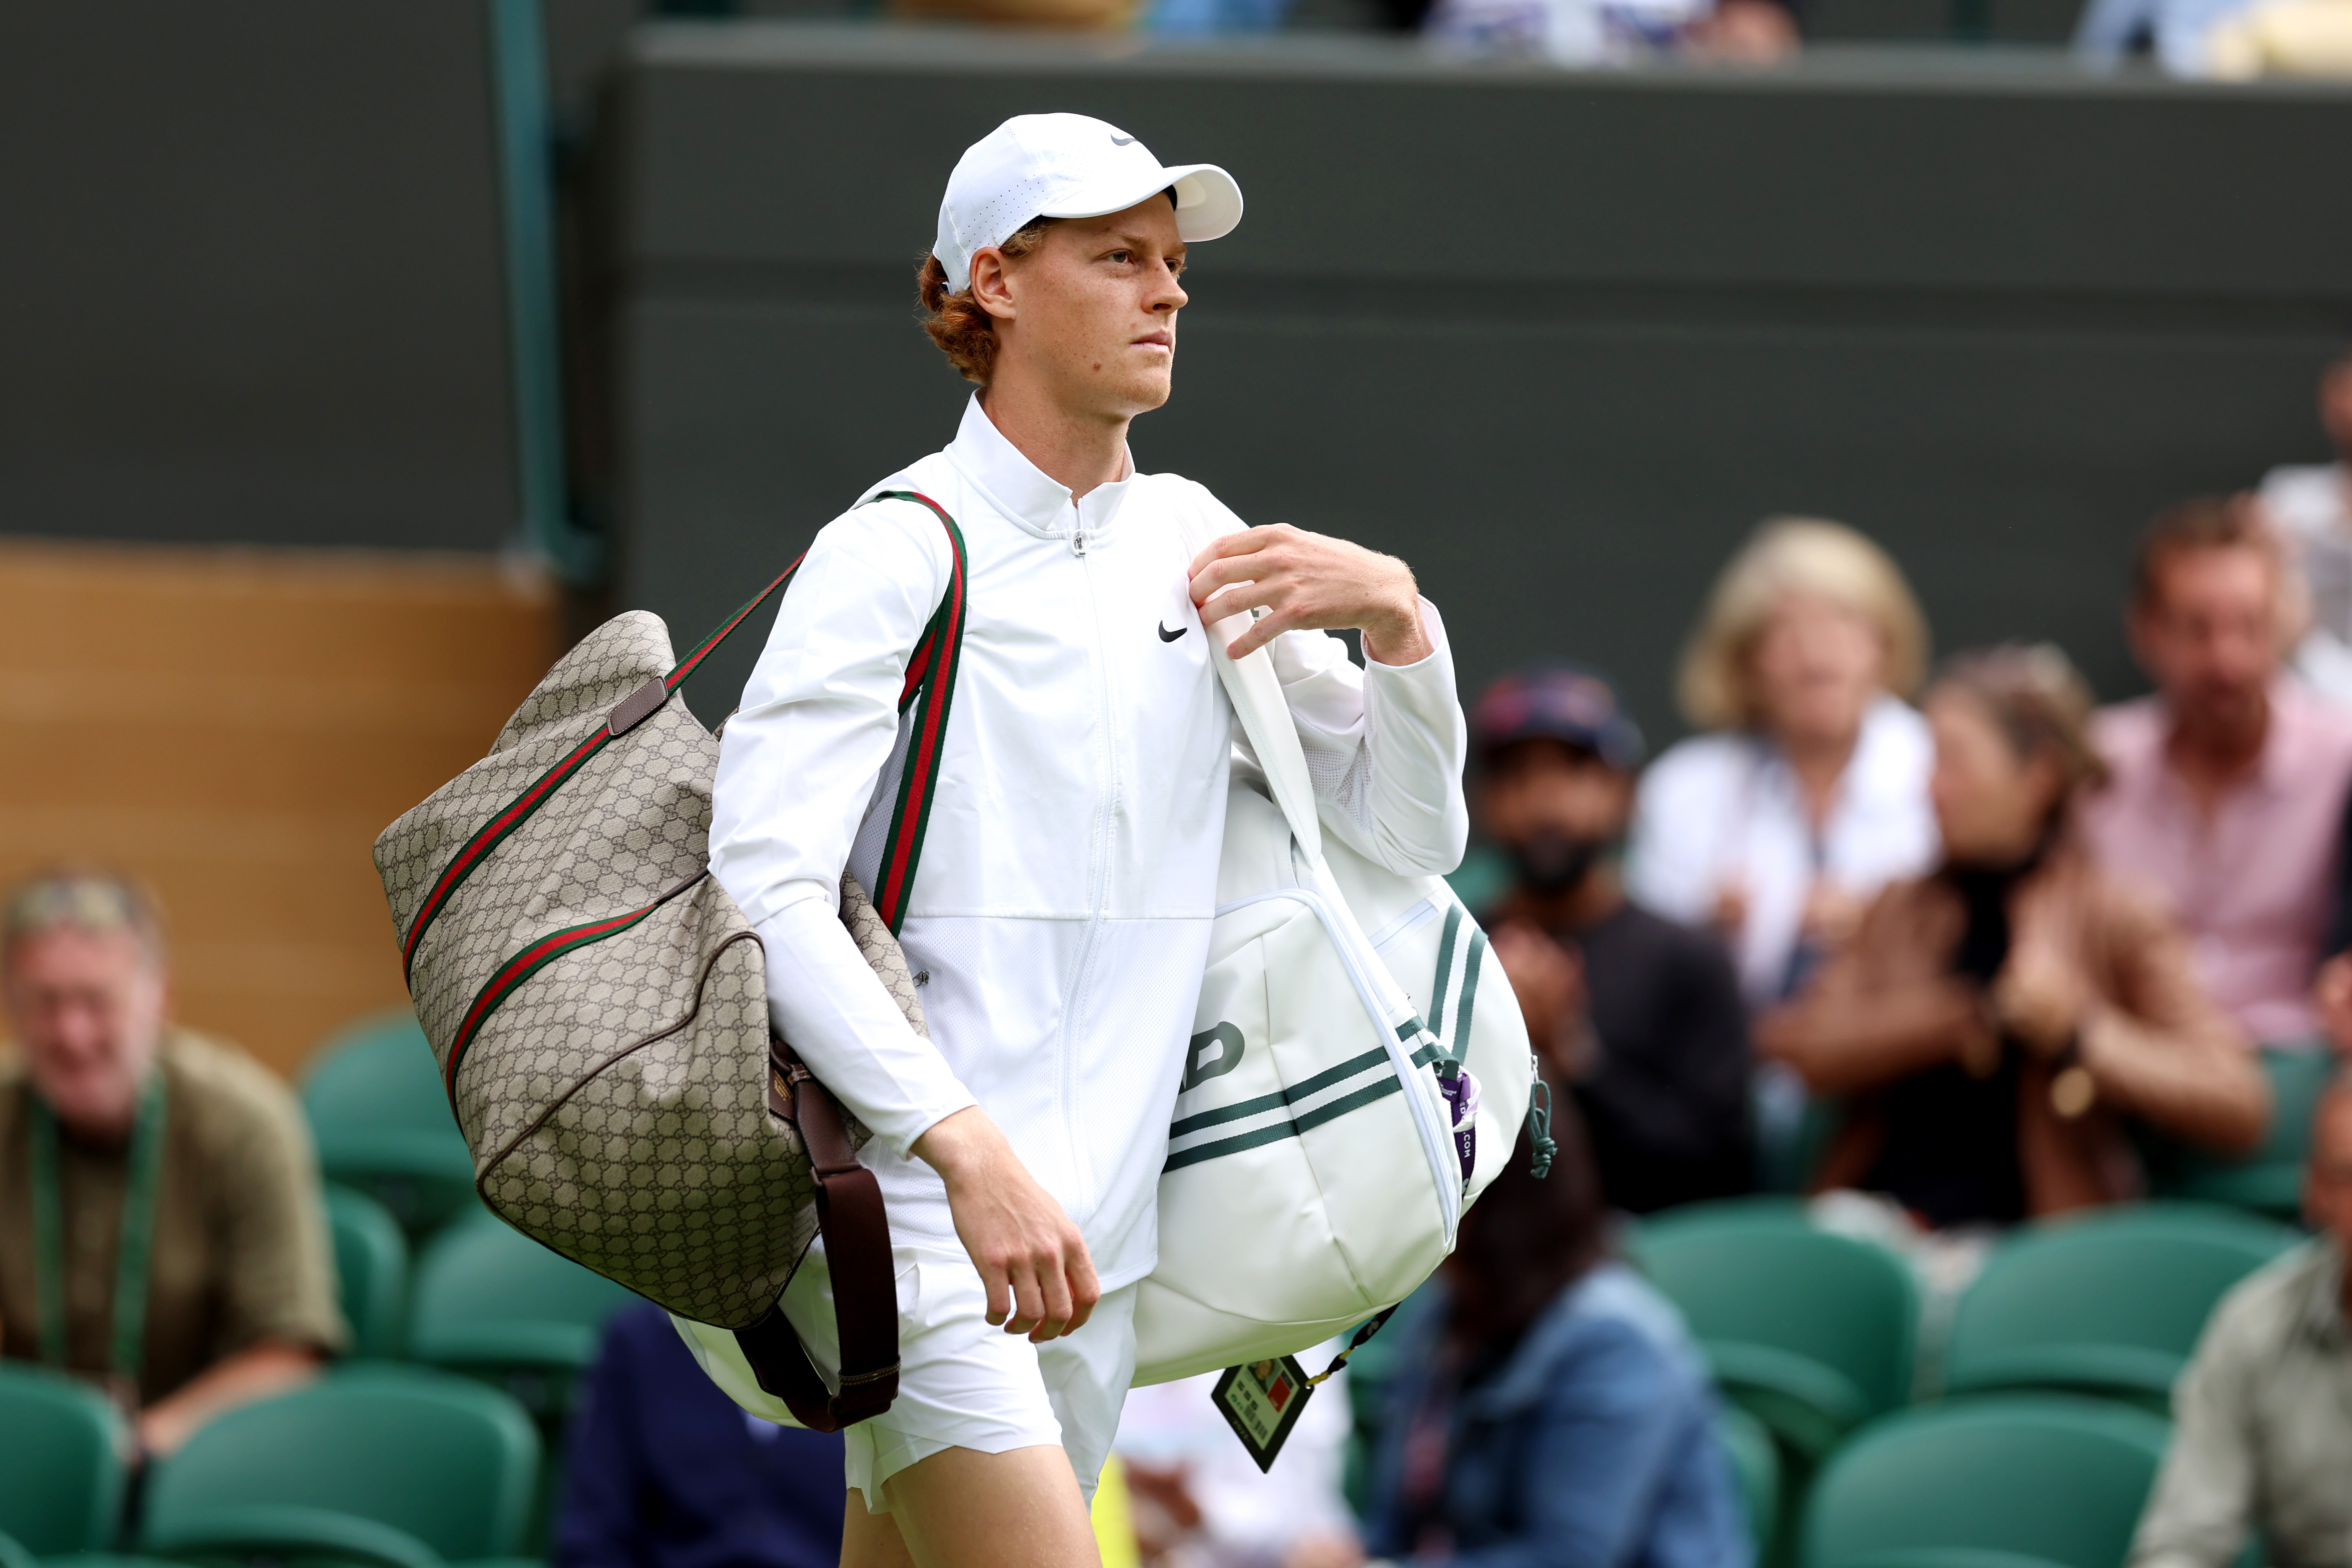 janniksin with a custom 1 of 1 @gucci bag at Wimbledon 🌱🔥 . 📸 @gucci